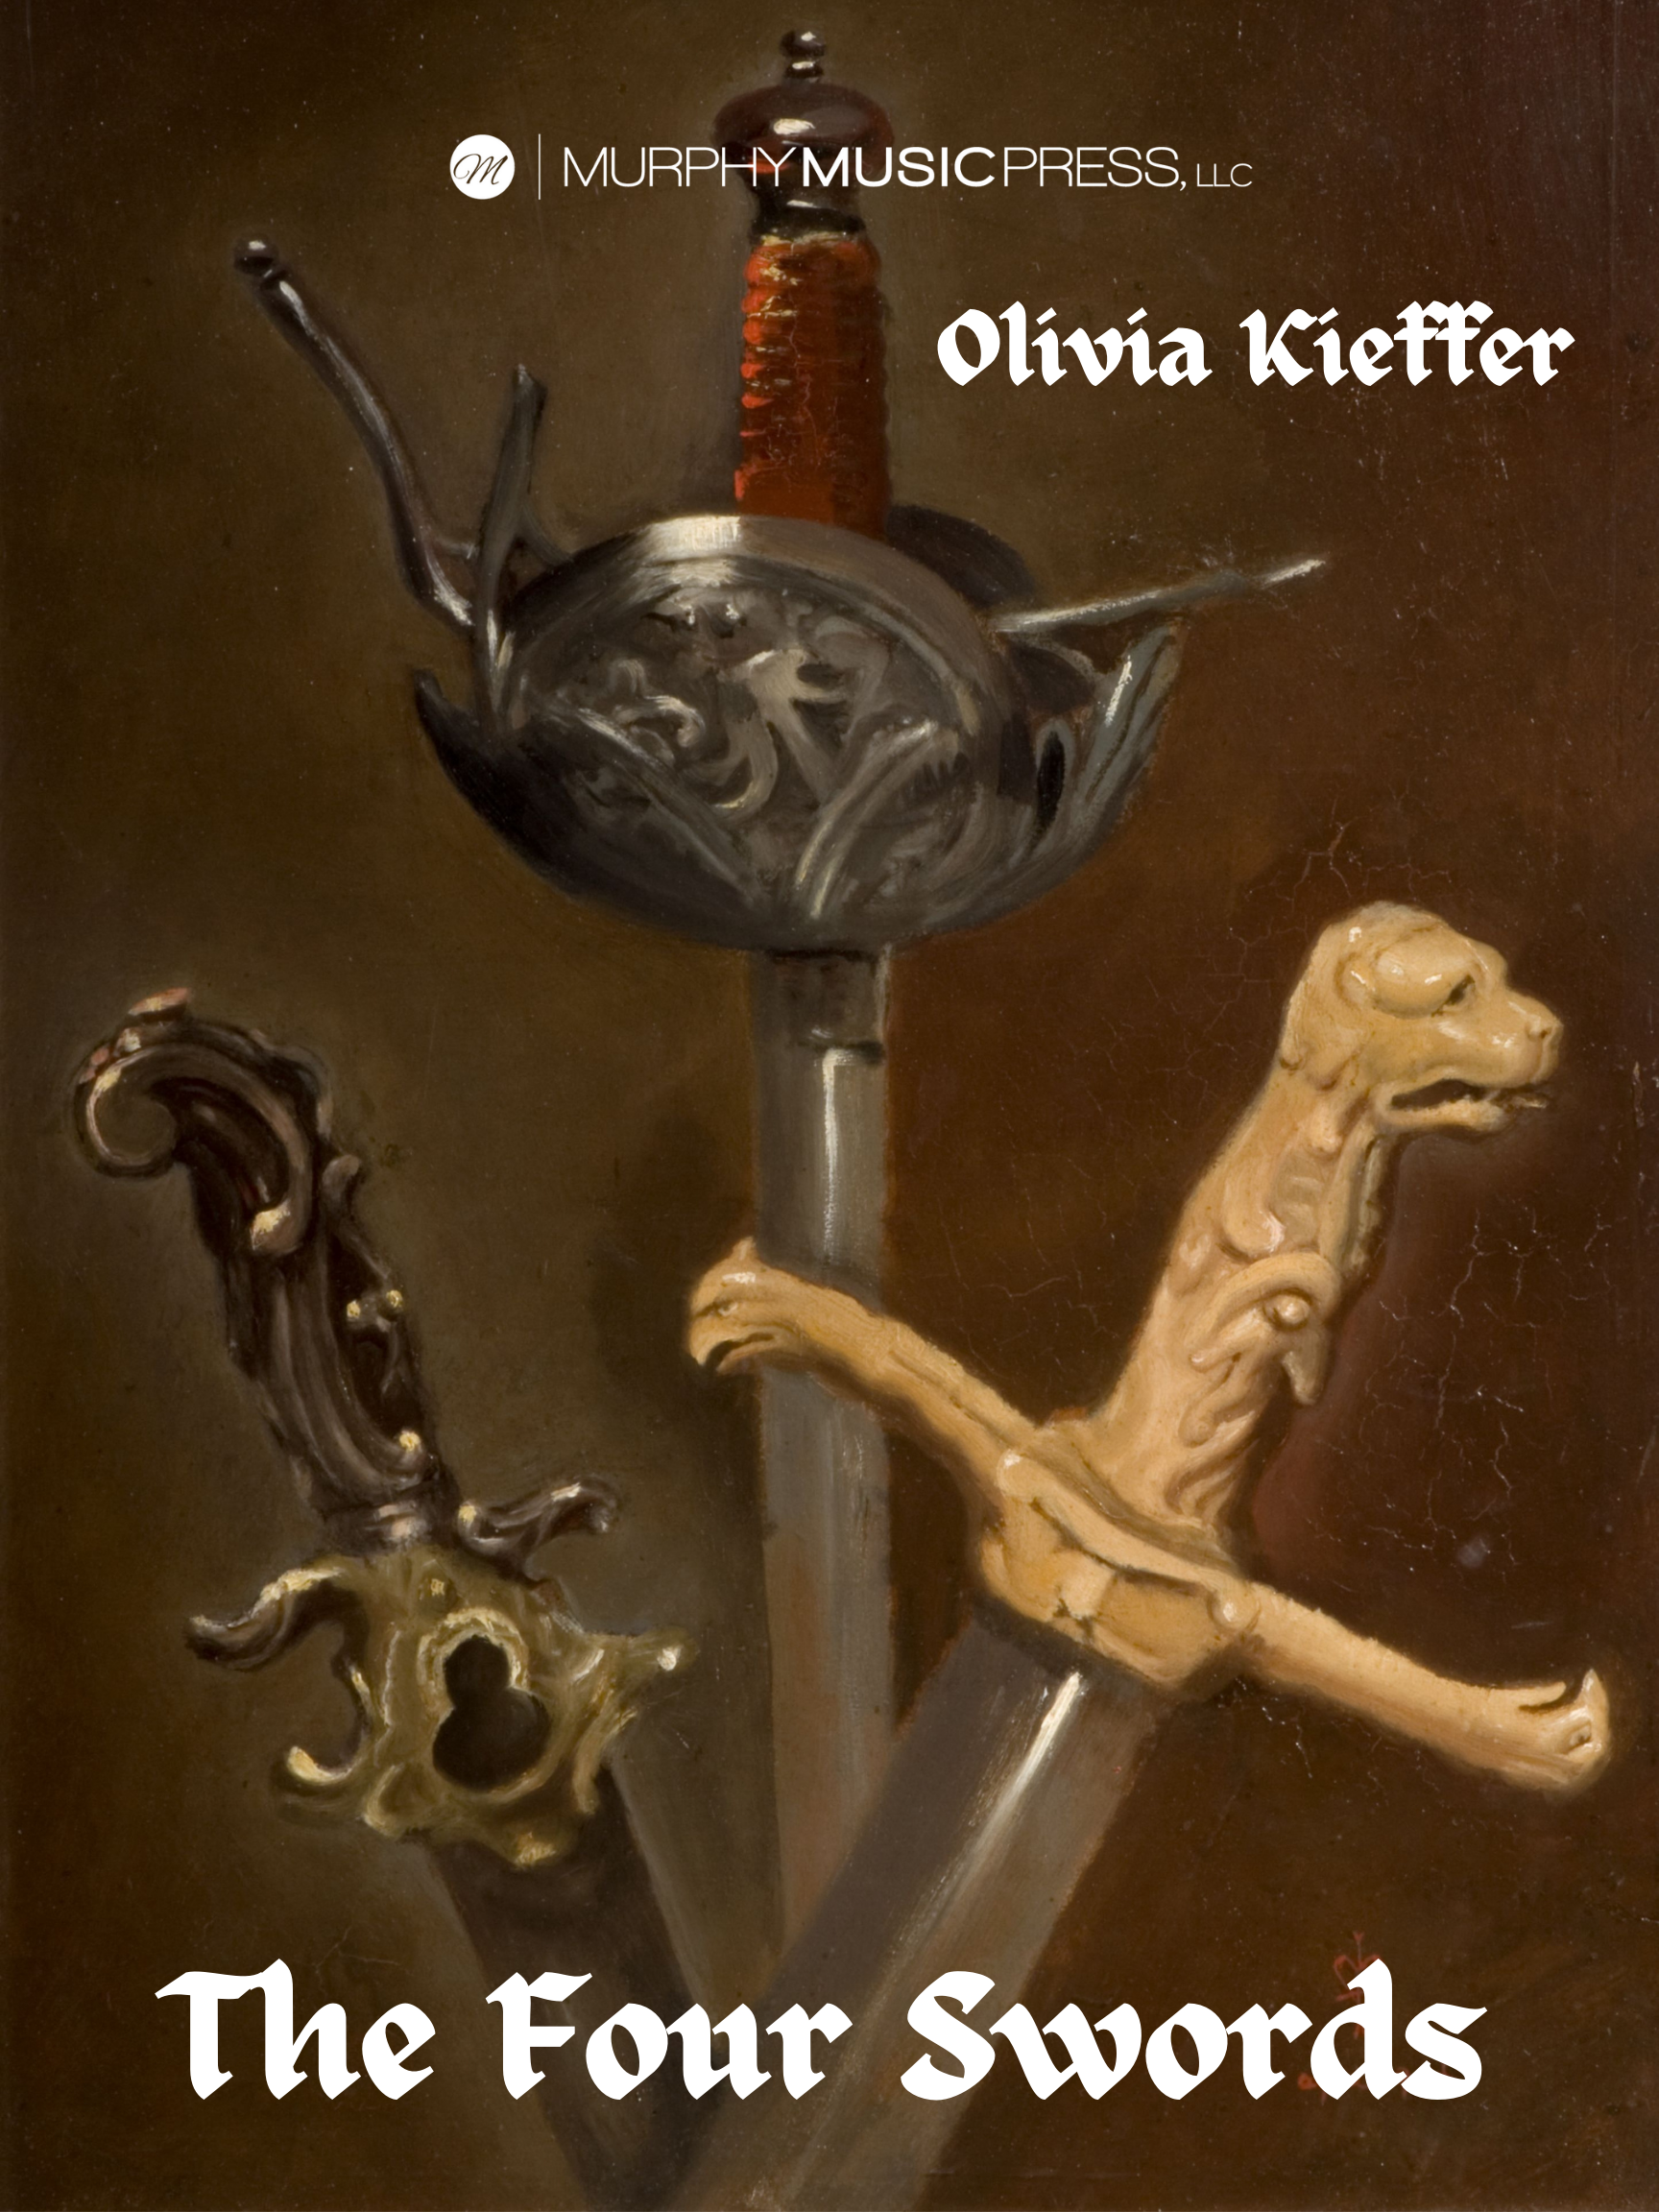 The Four Swords (Score Only) by Olivia Kieffer